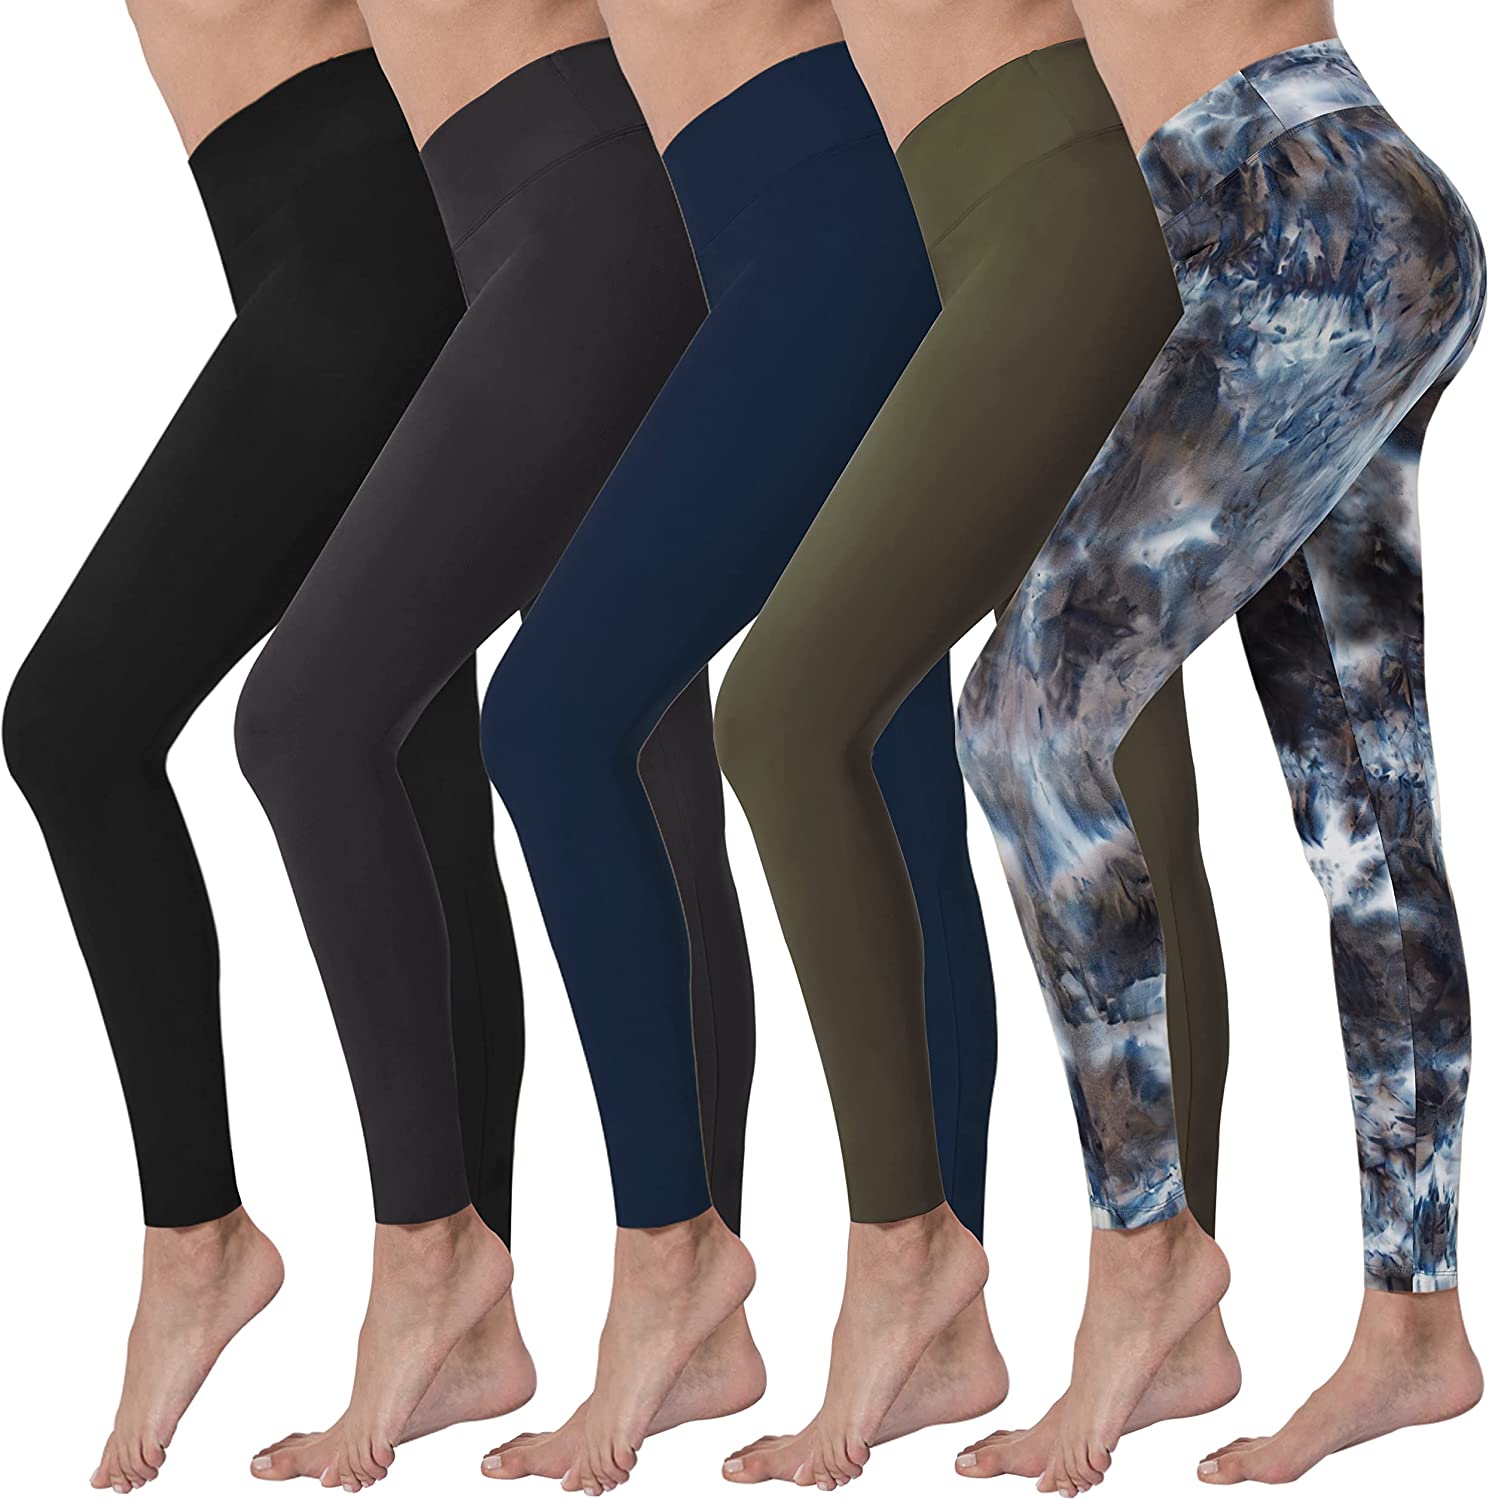  High Waisted Leggings For Women-Womens Workout Leggings  Running Tummy Control Stretch Yoga Pants Reg&Plus Size